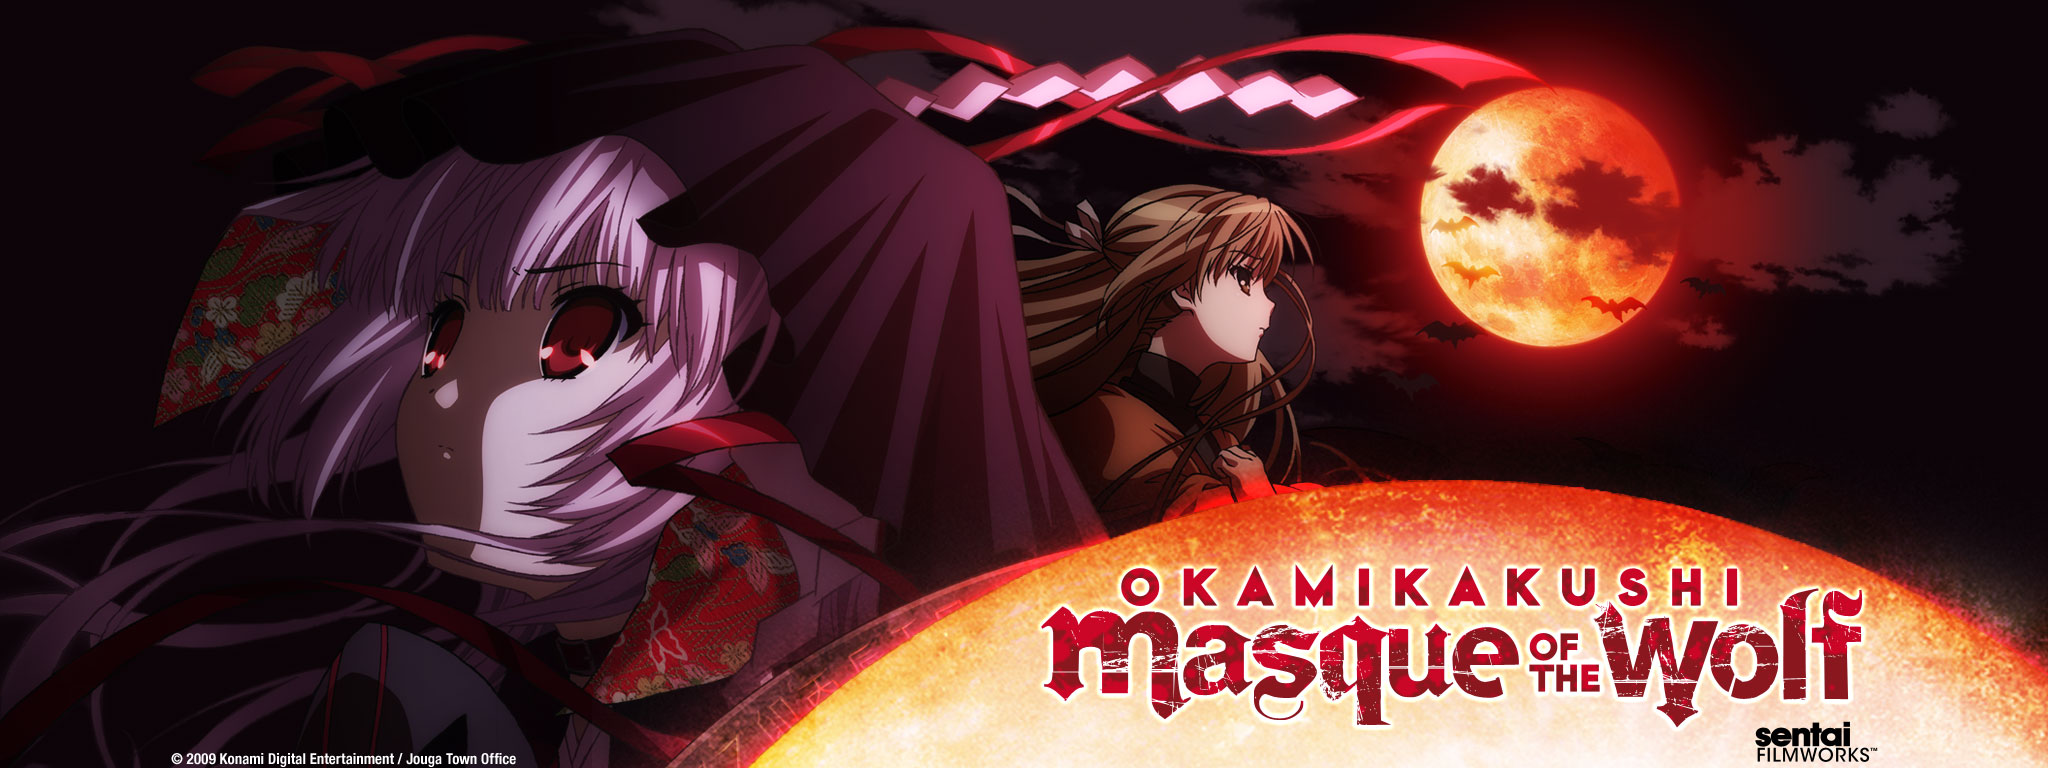 Title Art for Okamikakushi ~ Masque of the Wolf